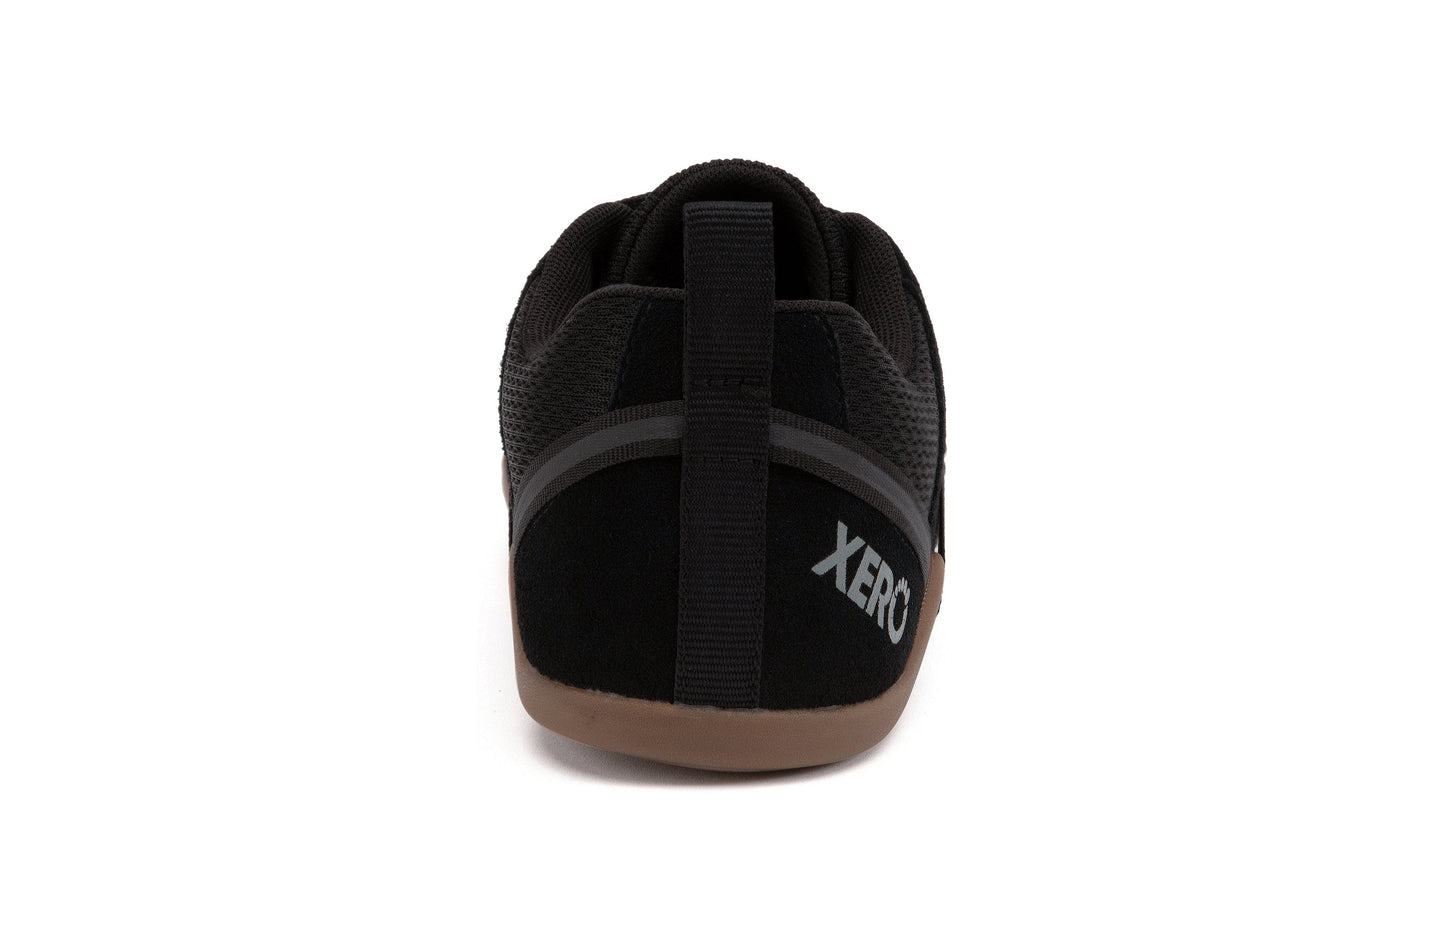 Xero Shoes Prio Suede barfods ruskind sneakers til mænd i farven black gum, bagfra